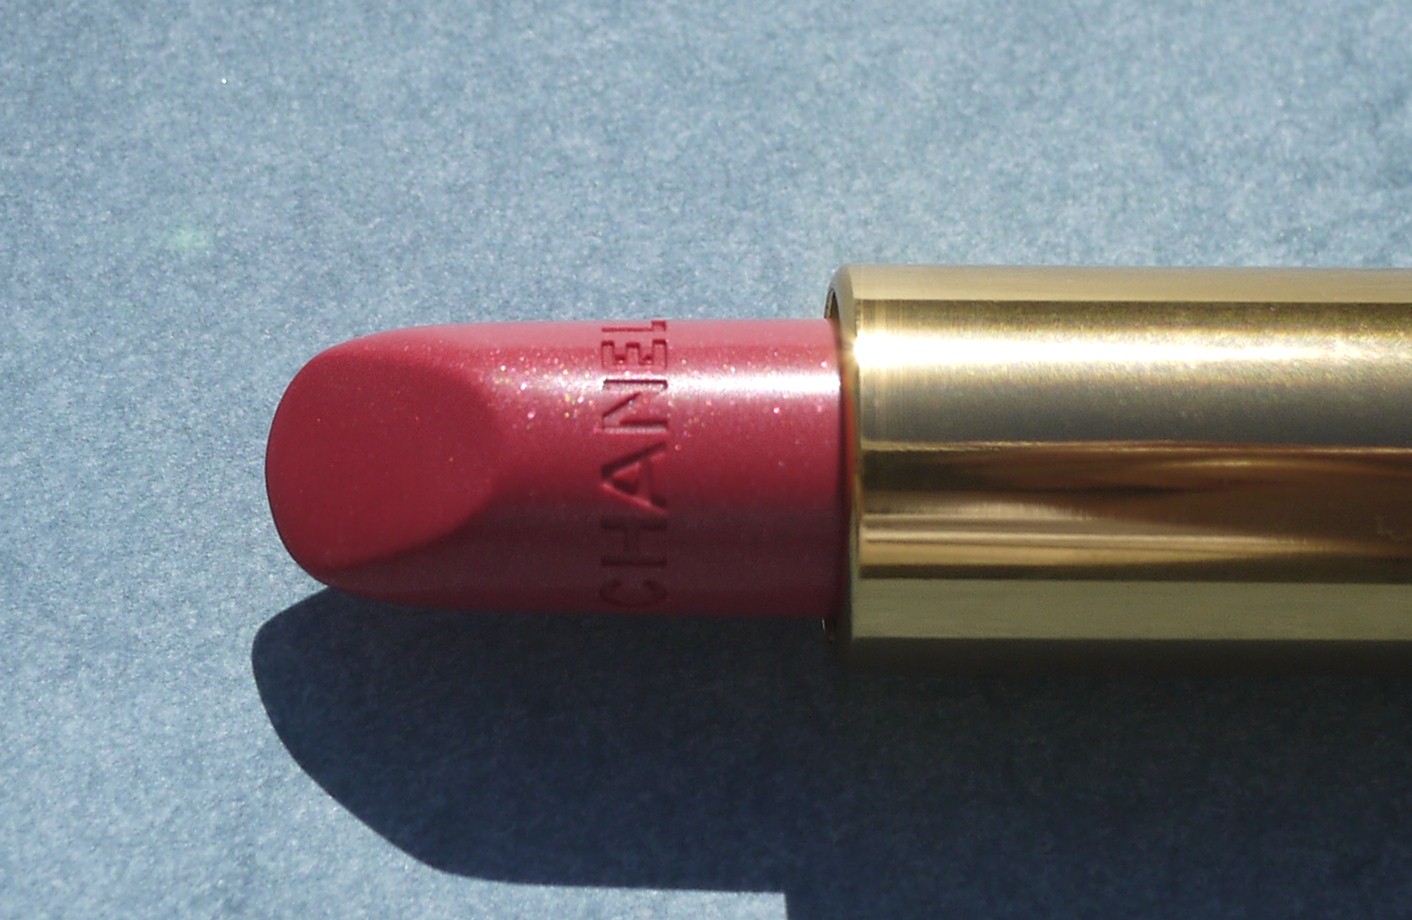 Best Deals for Chanel Lipstick Colors